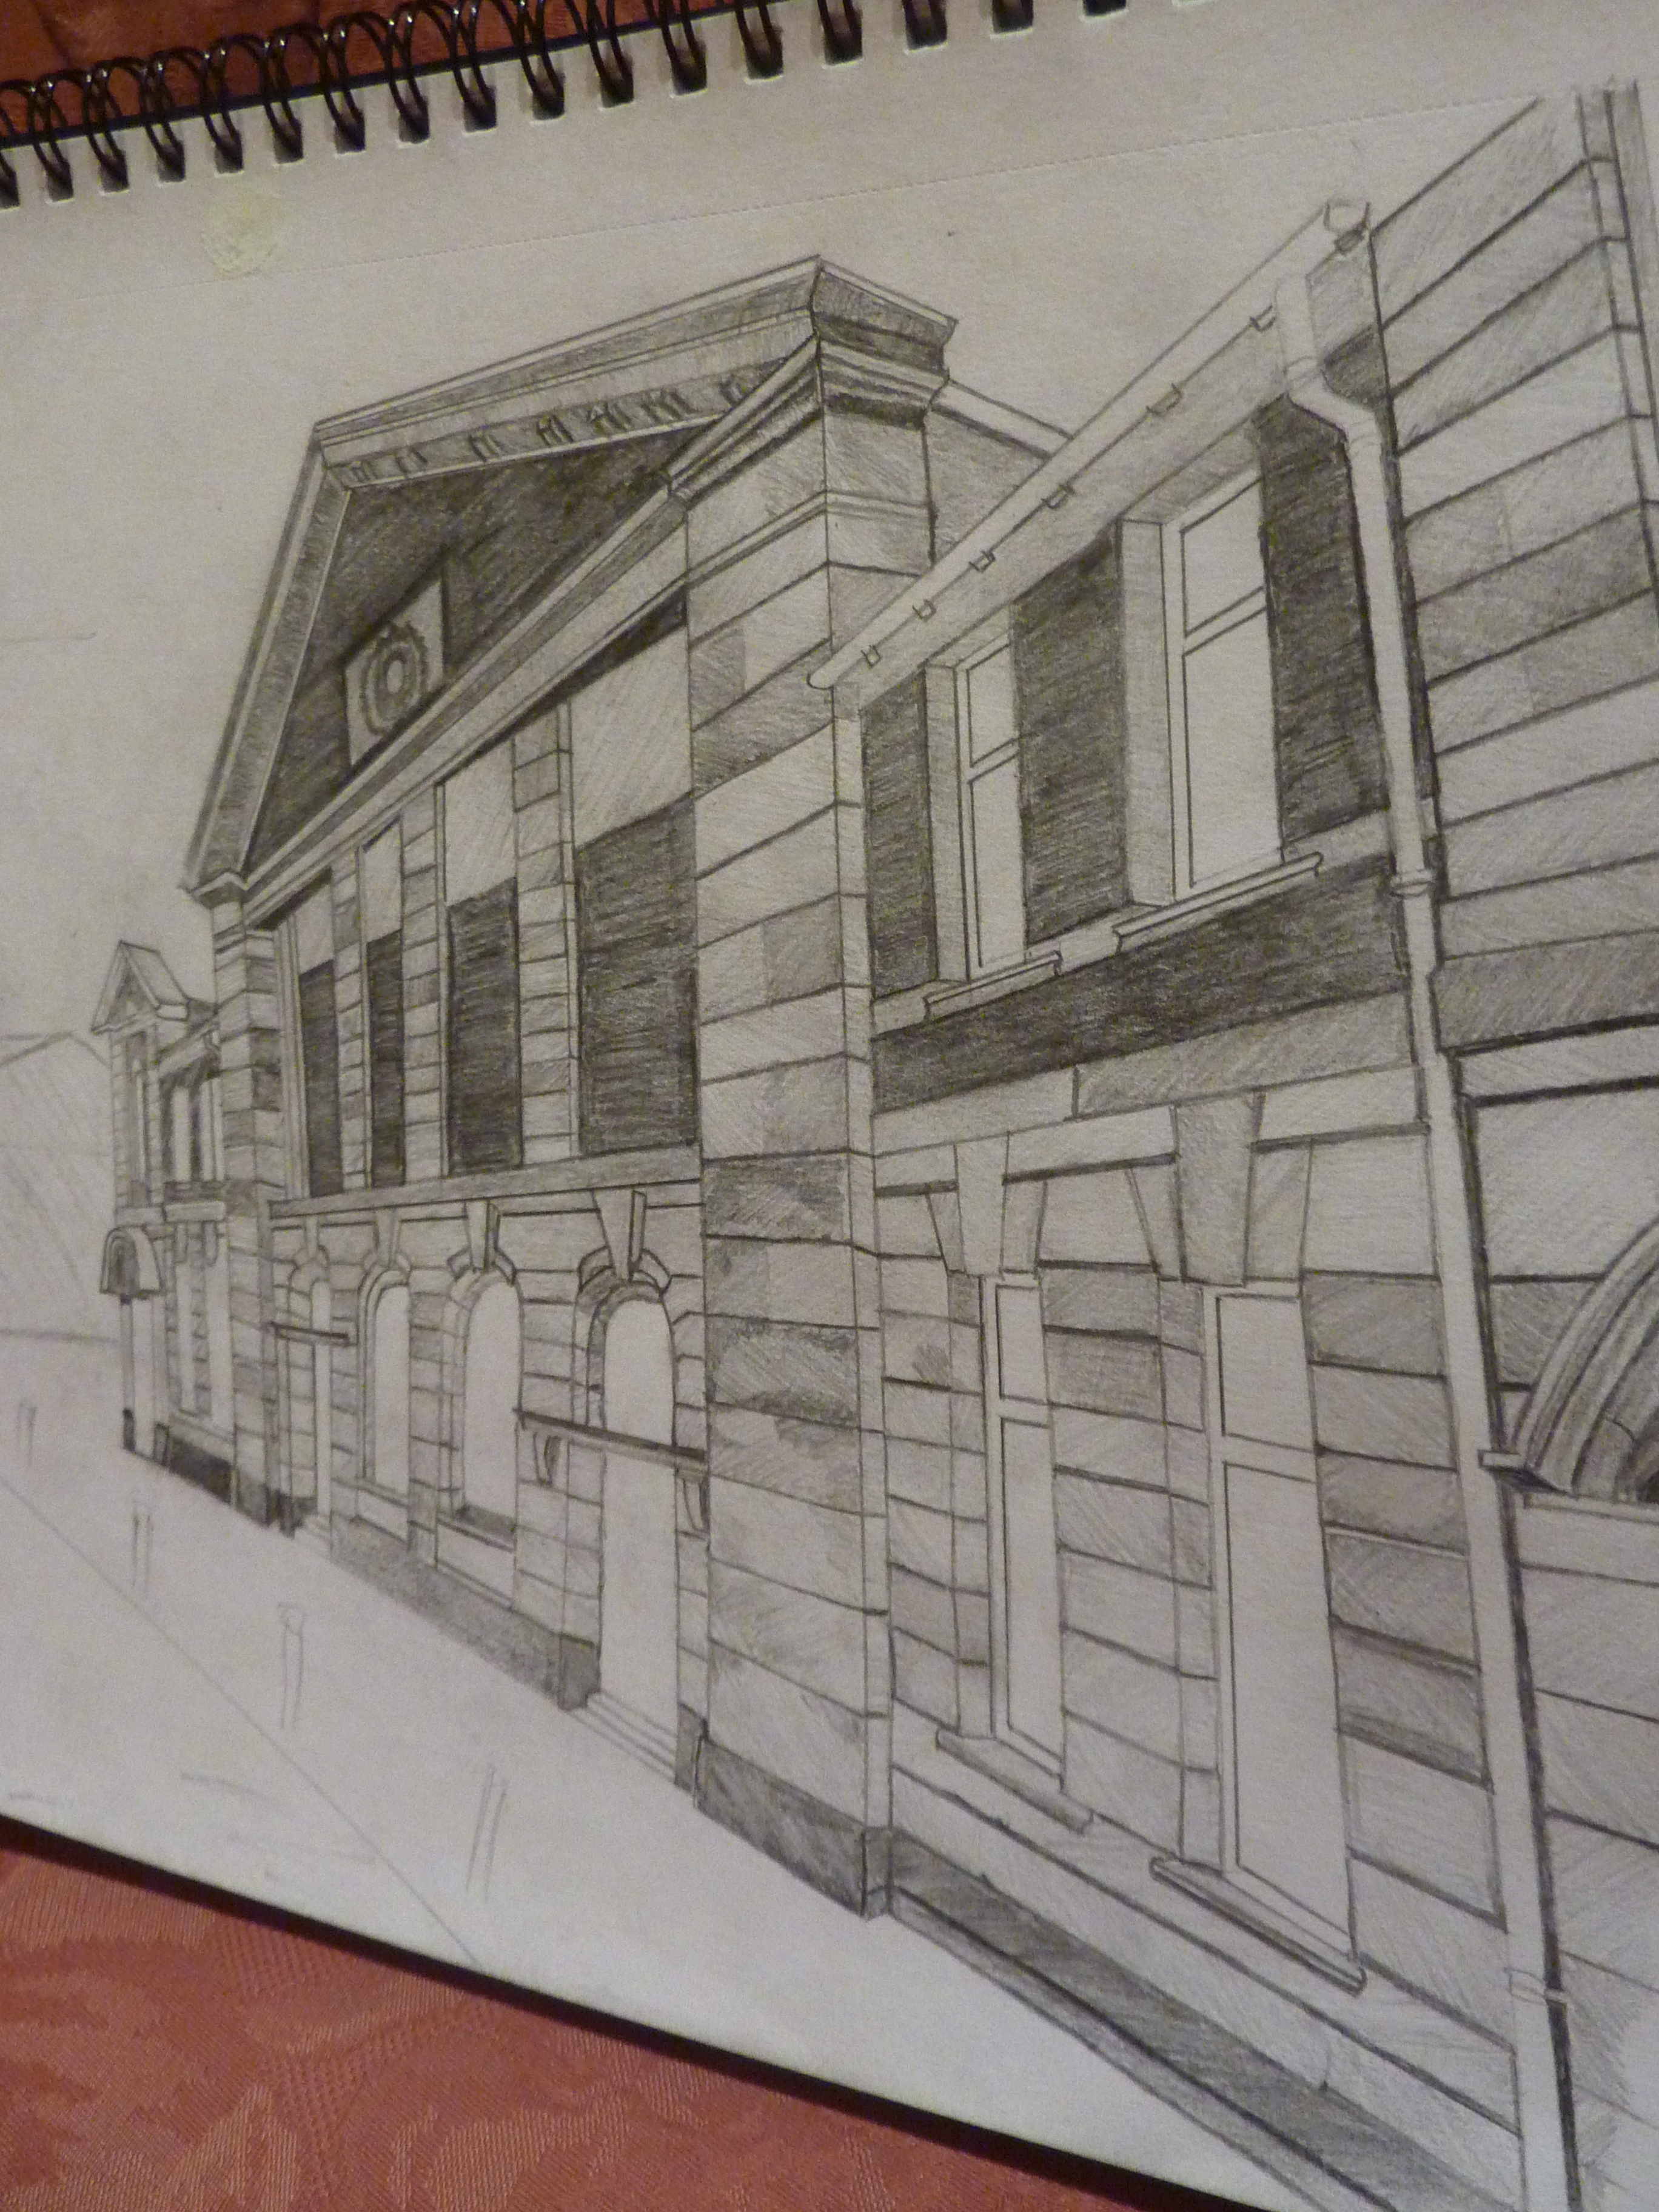 Urban Building Sketch by eyop1 on DeviantArt